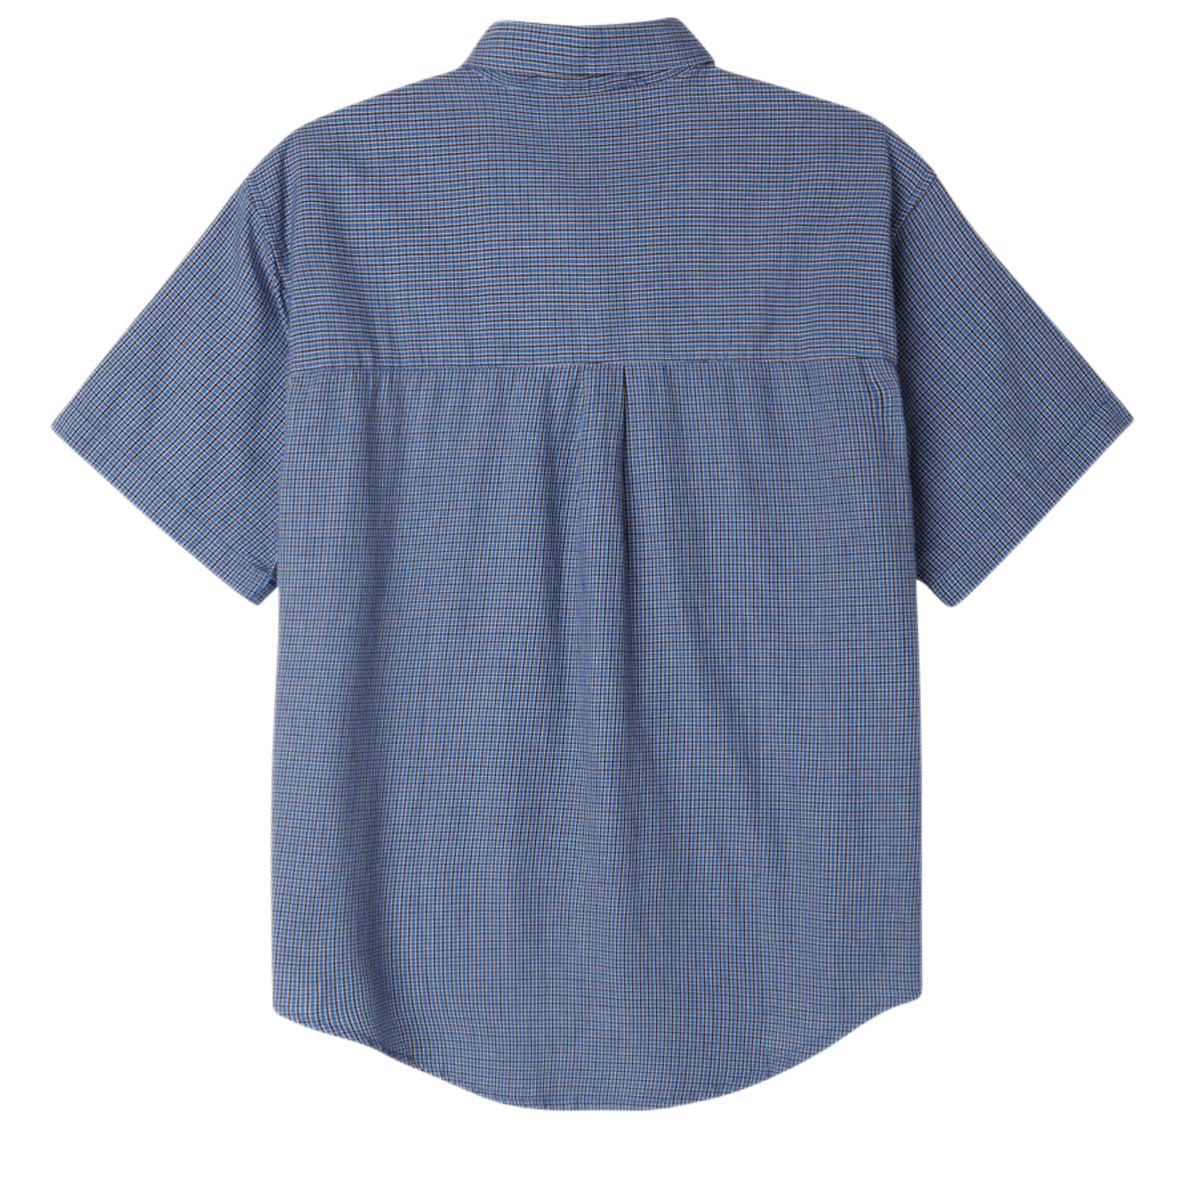 Obey Bigwig Proof Woven Shirt - Coronet Blue Multi image 2